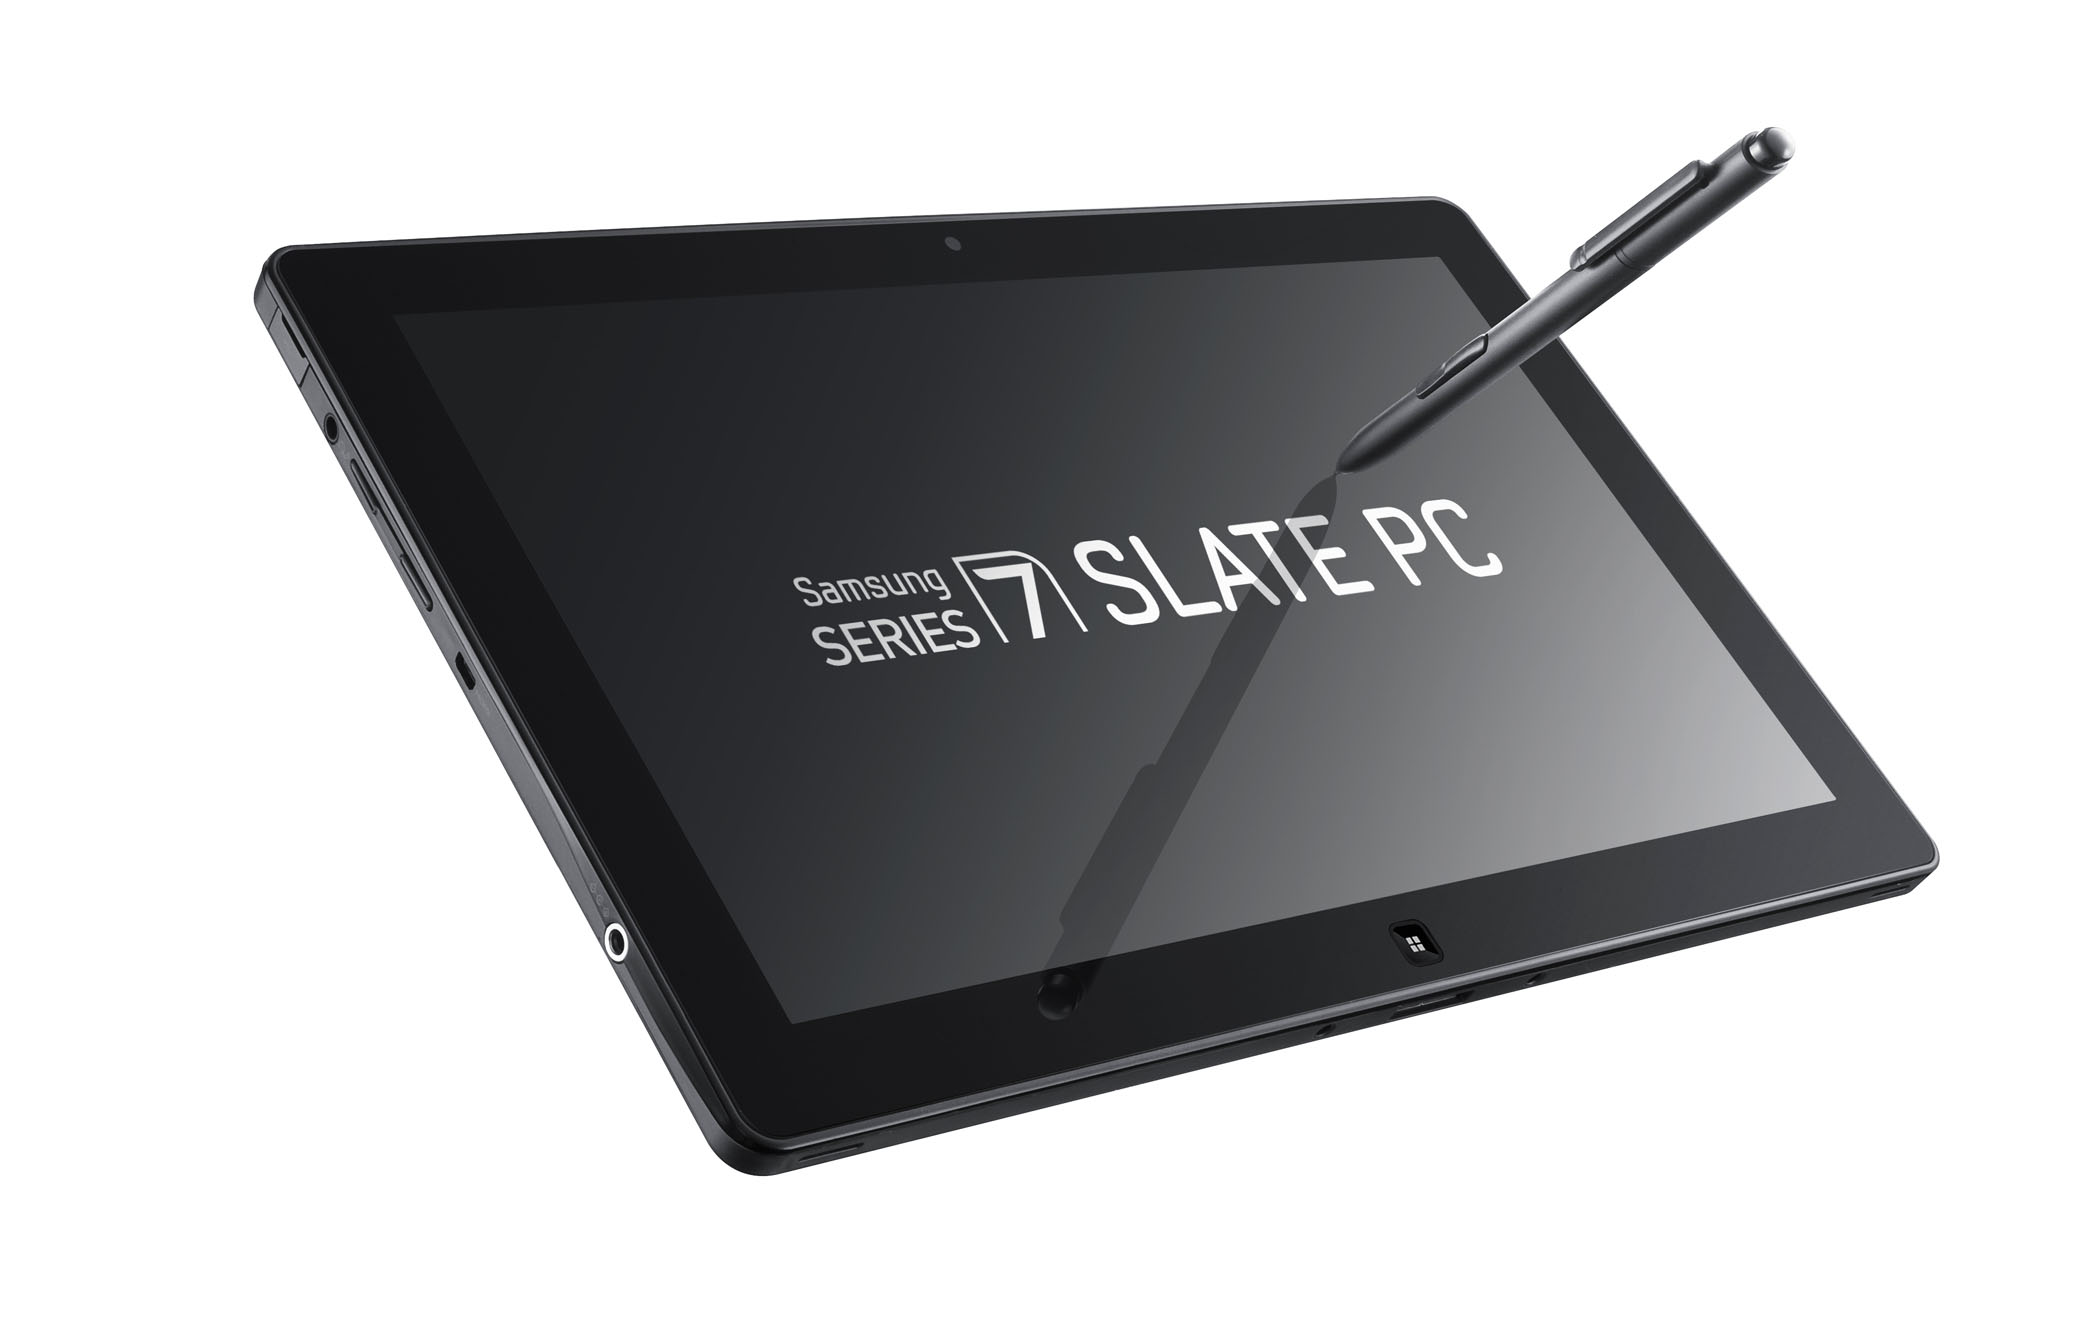 samsung series 7 slate tablet